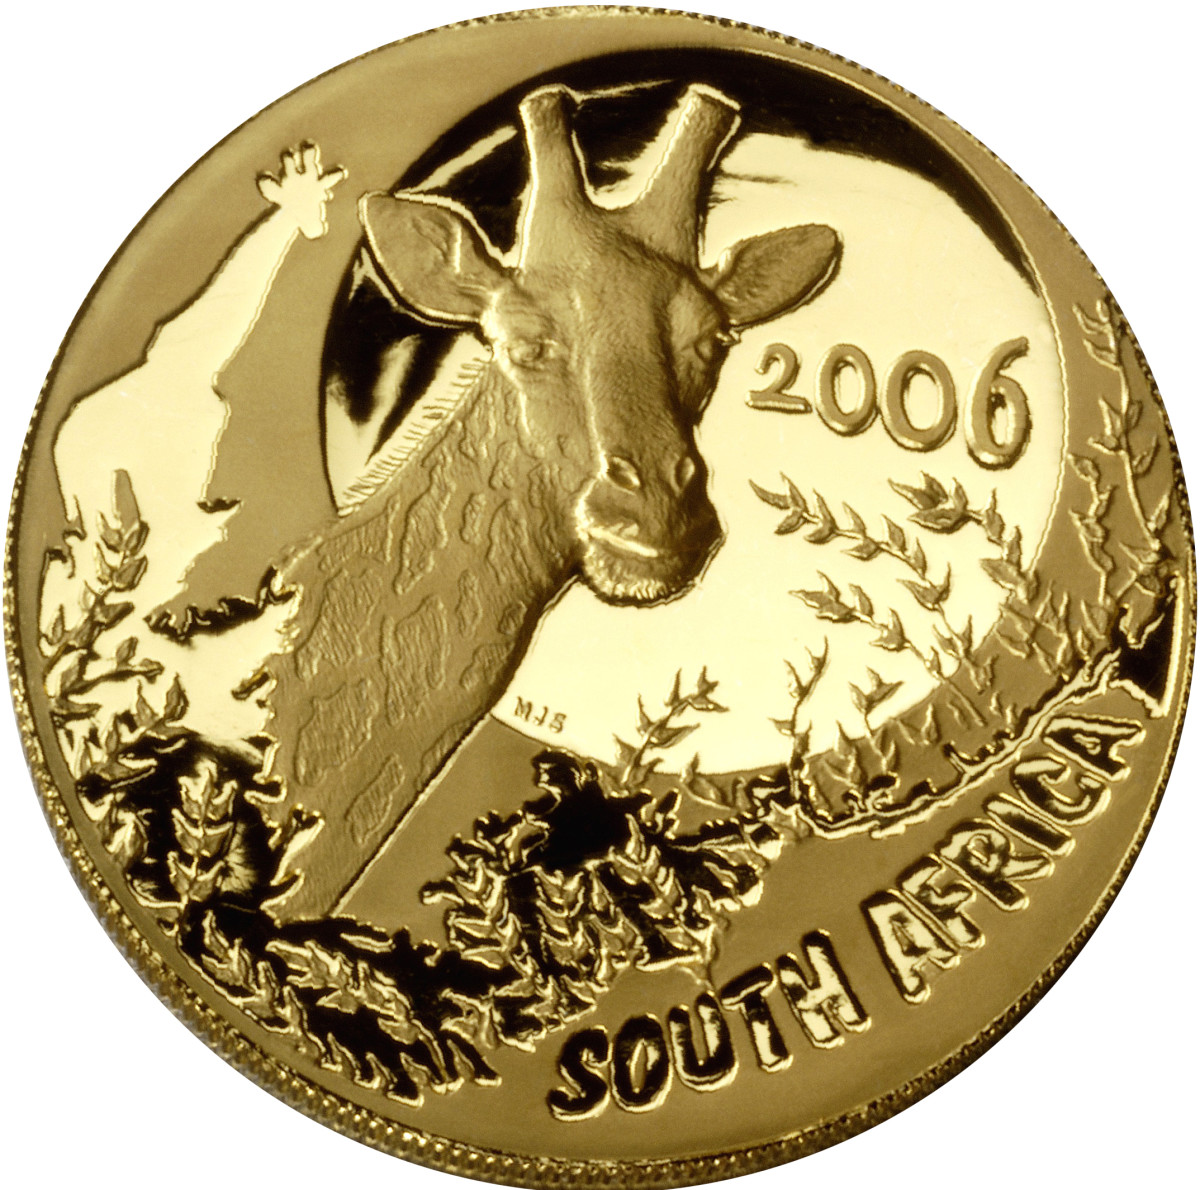 MDC award-winning 2006 giraffe coin from the Giants of Africa series.